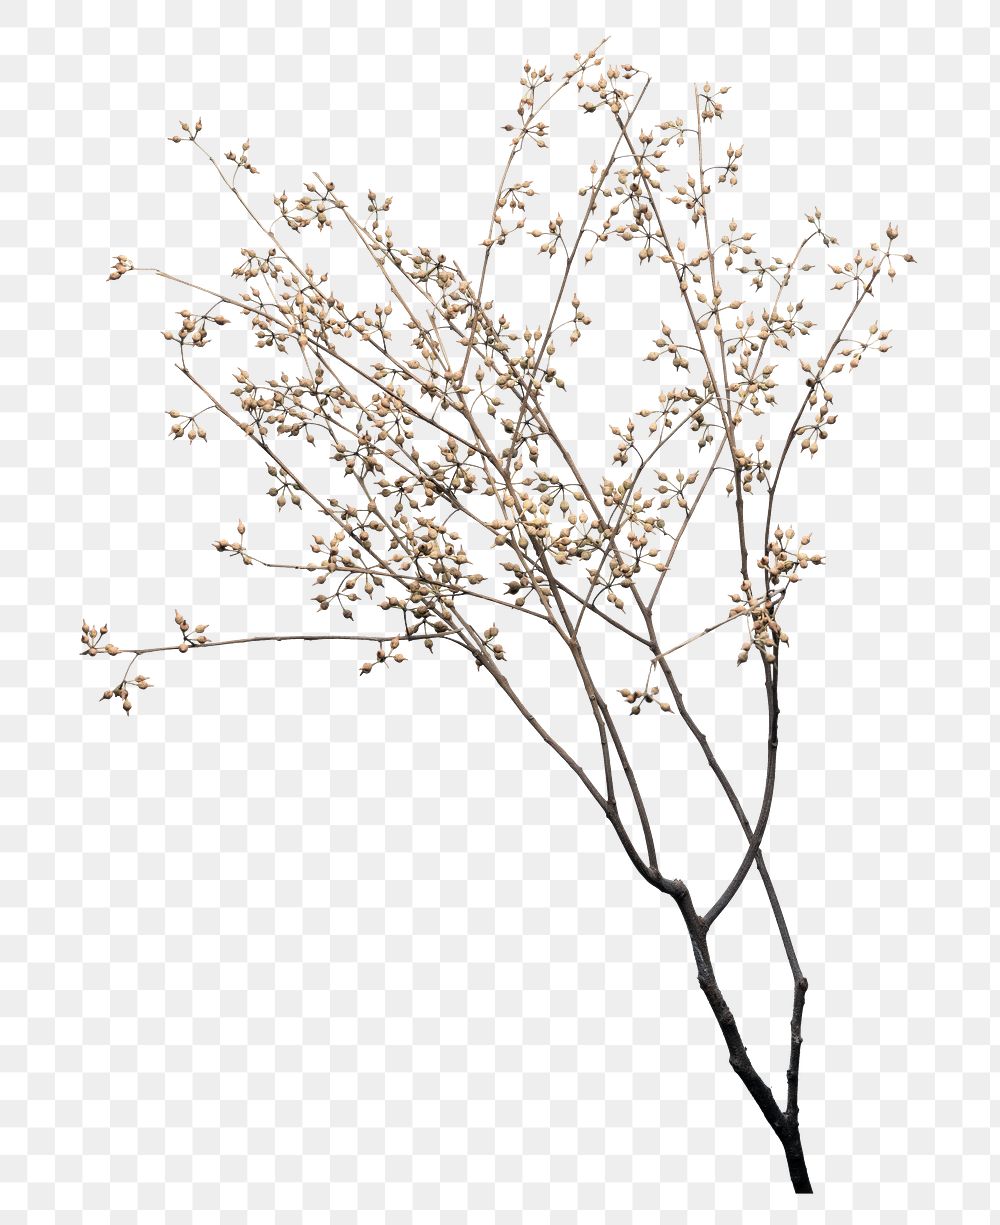 Dry flower branch design element